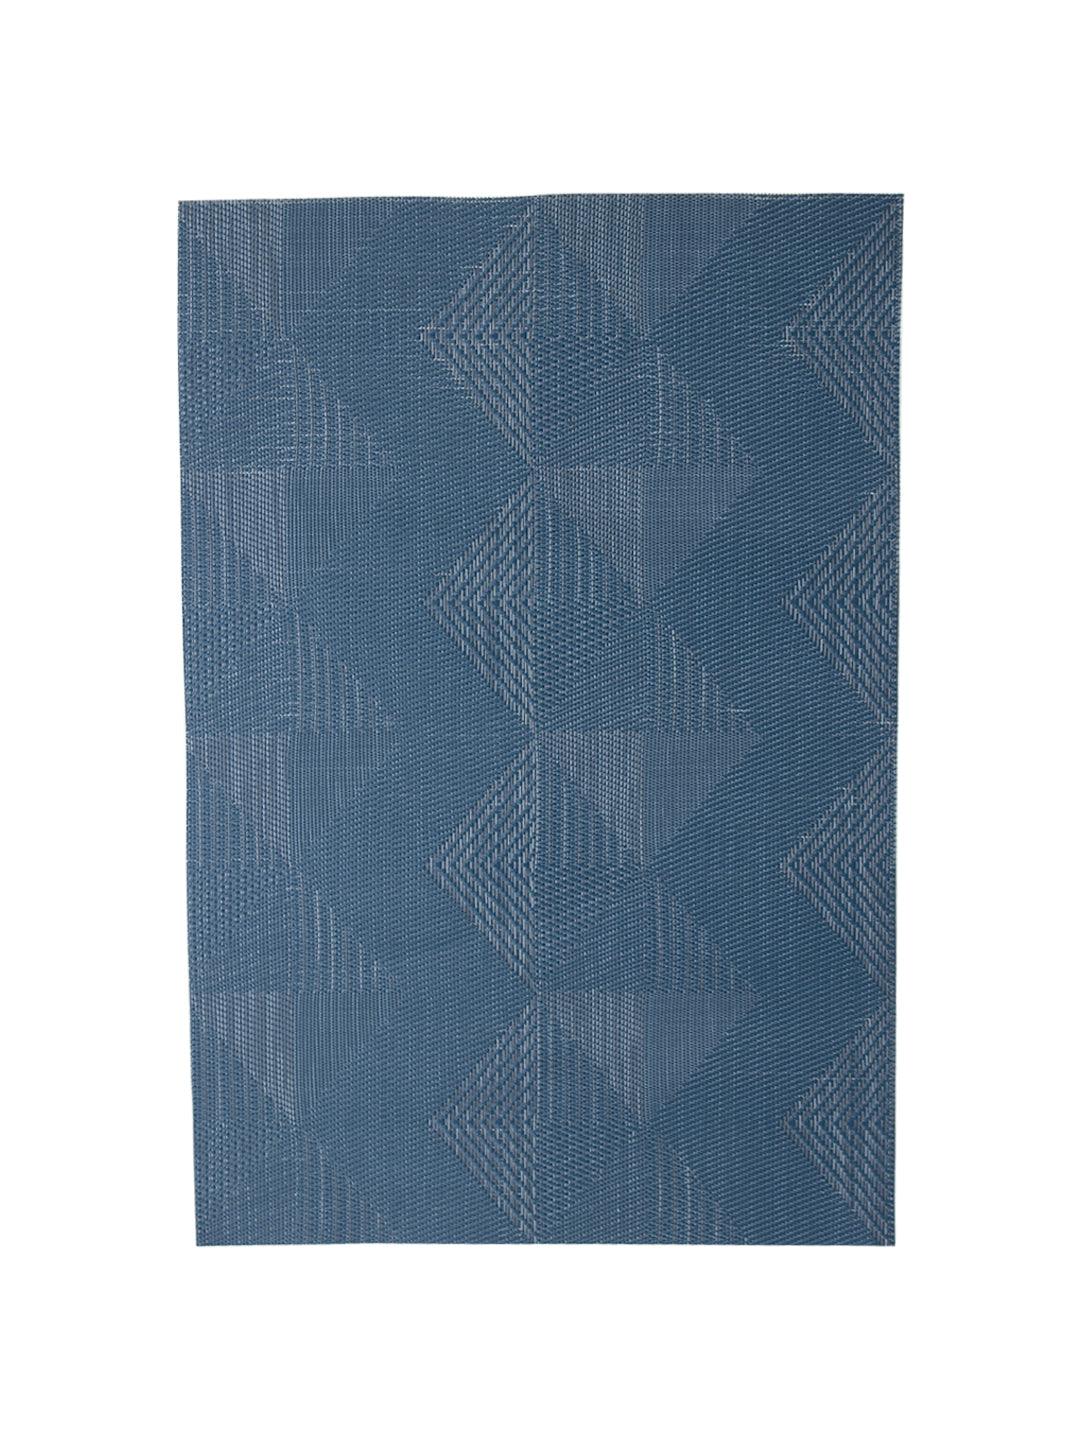 Blue Tringle Pattern - Placemat Mat Set Of 4 - MARKET 99